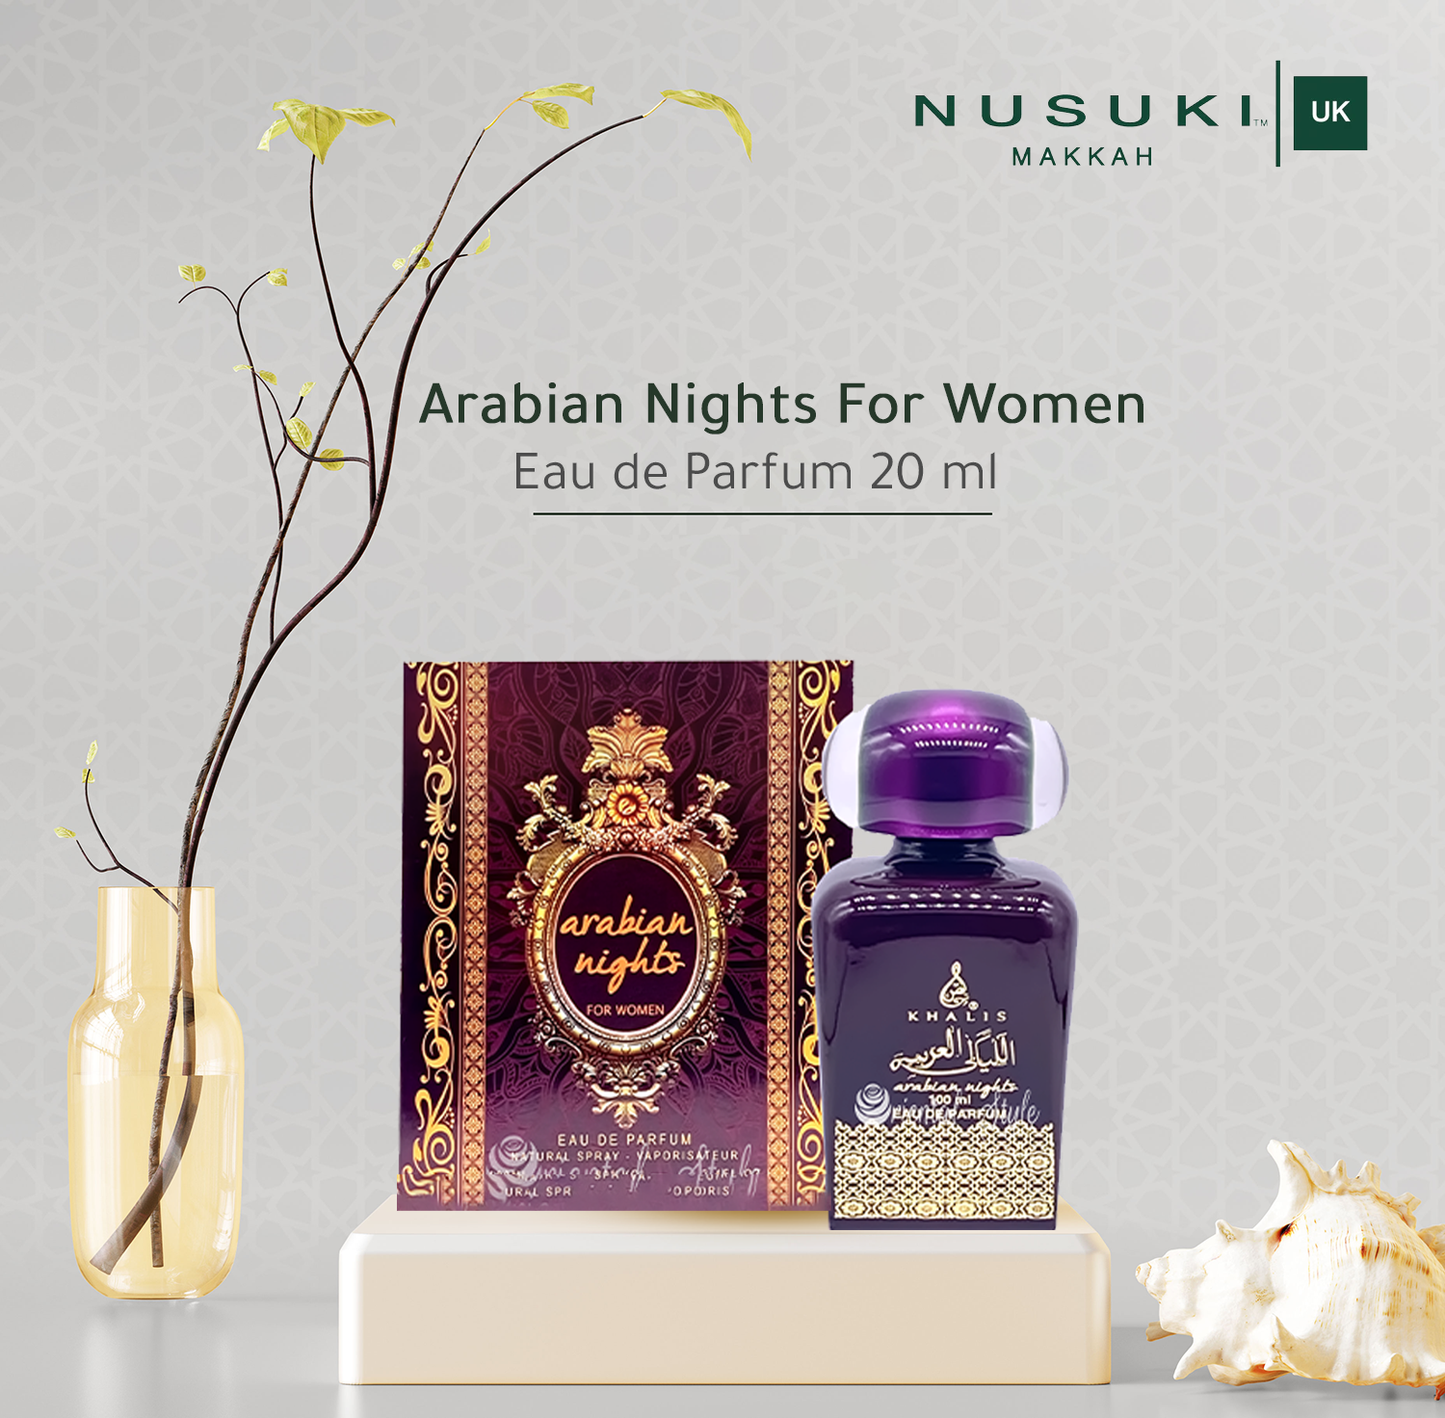 Arabian Nights For Women